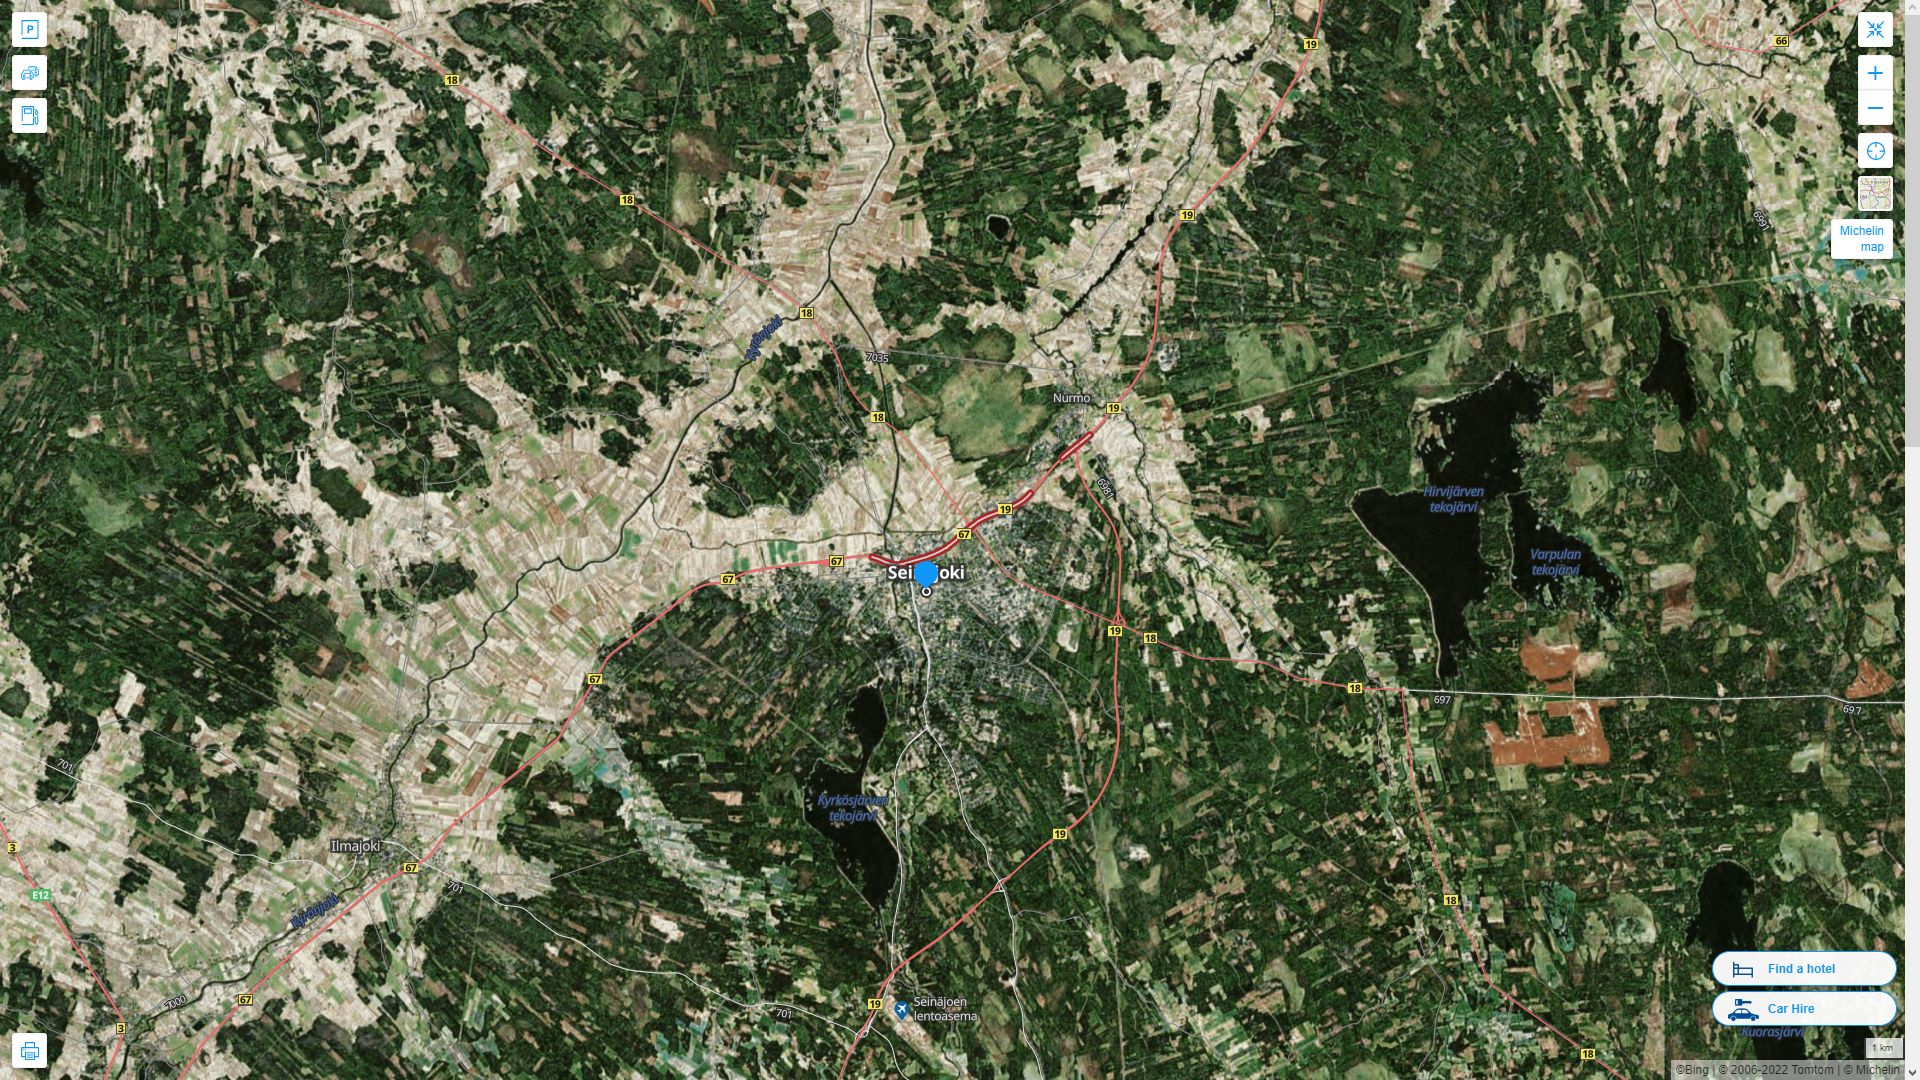 Seinajoki Highway and Road Map with Satellite View